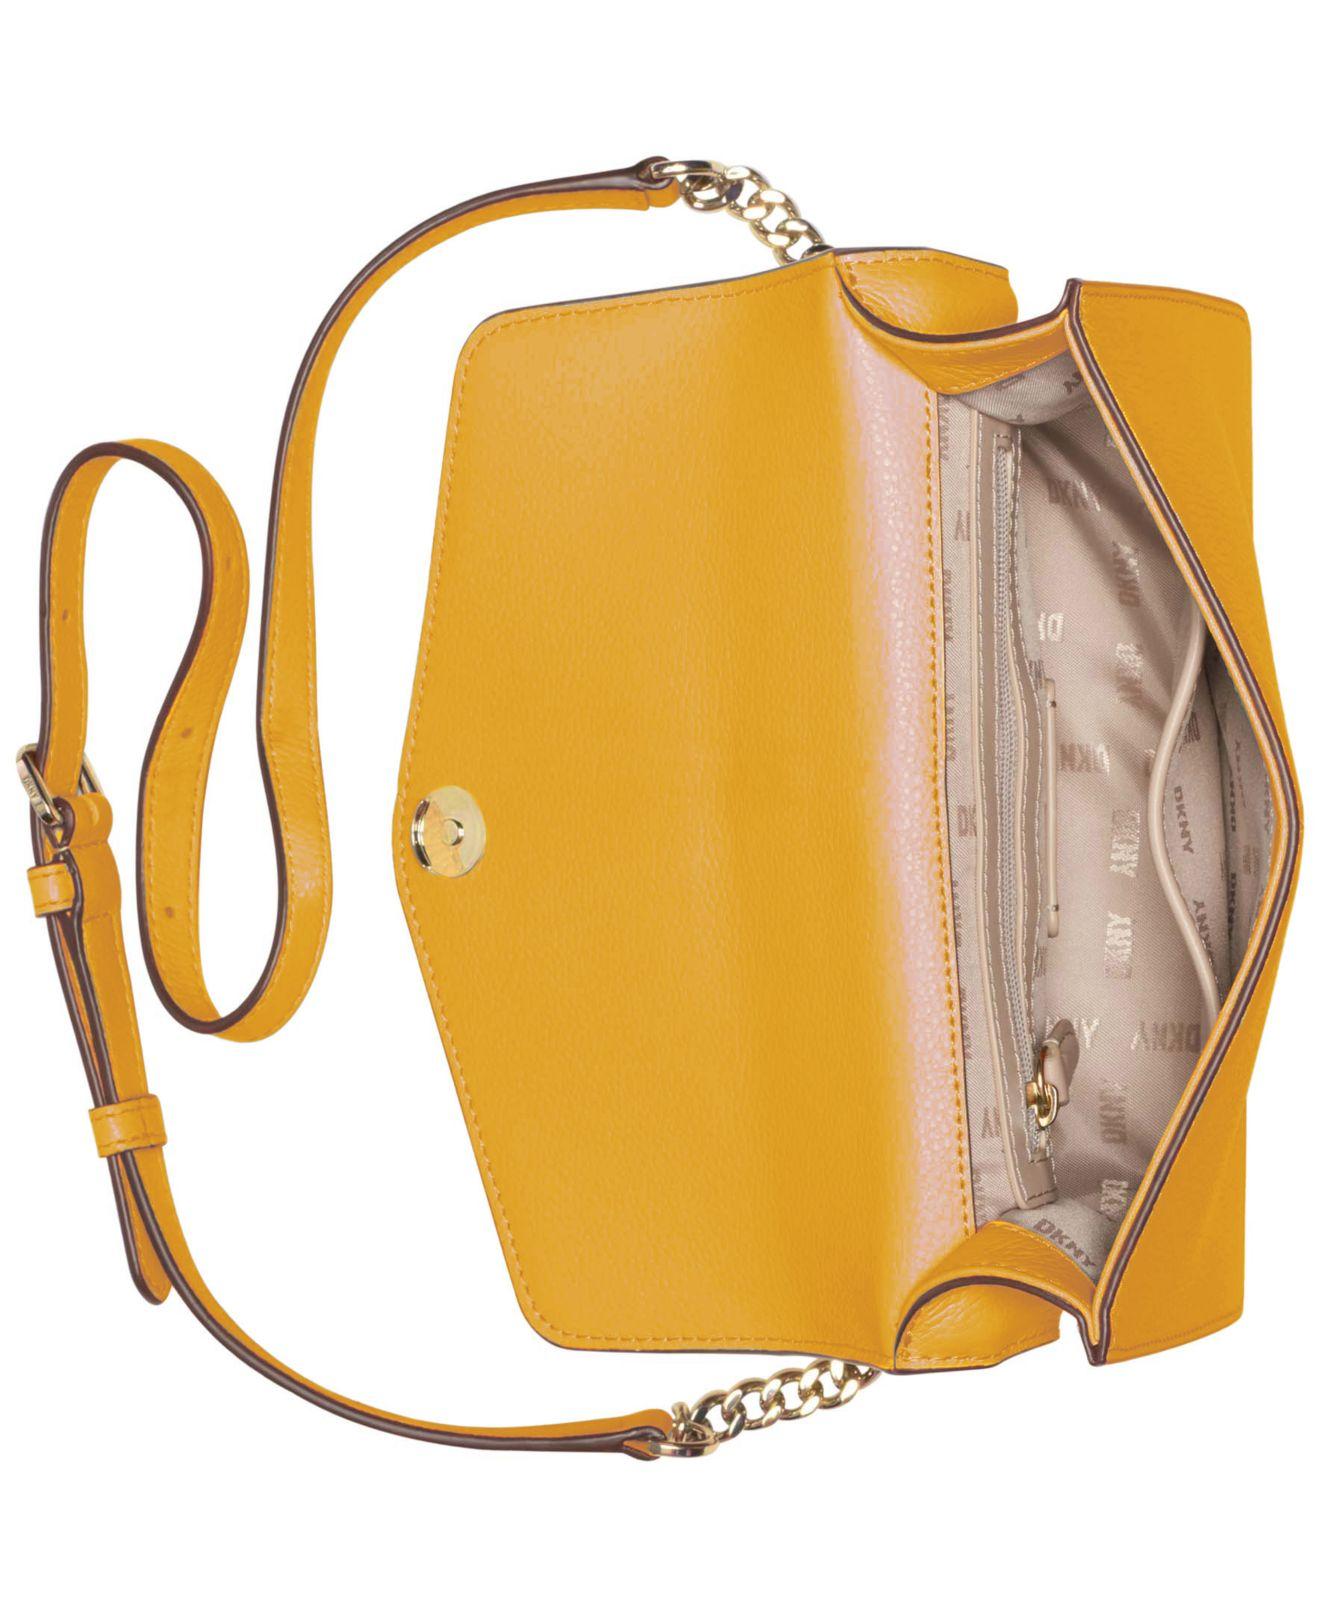 Dkny Women's Shoulder Bags - Yellow